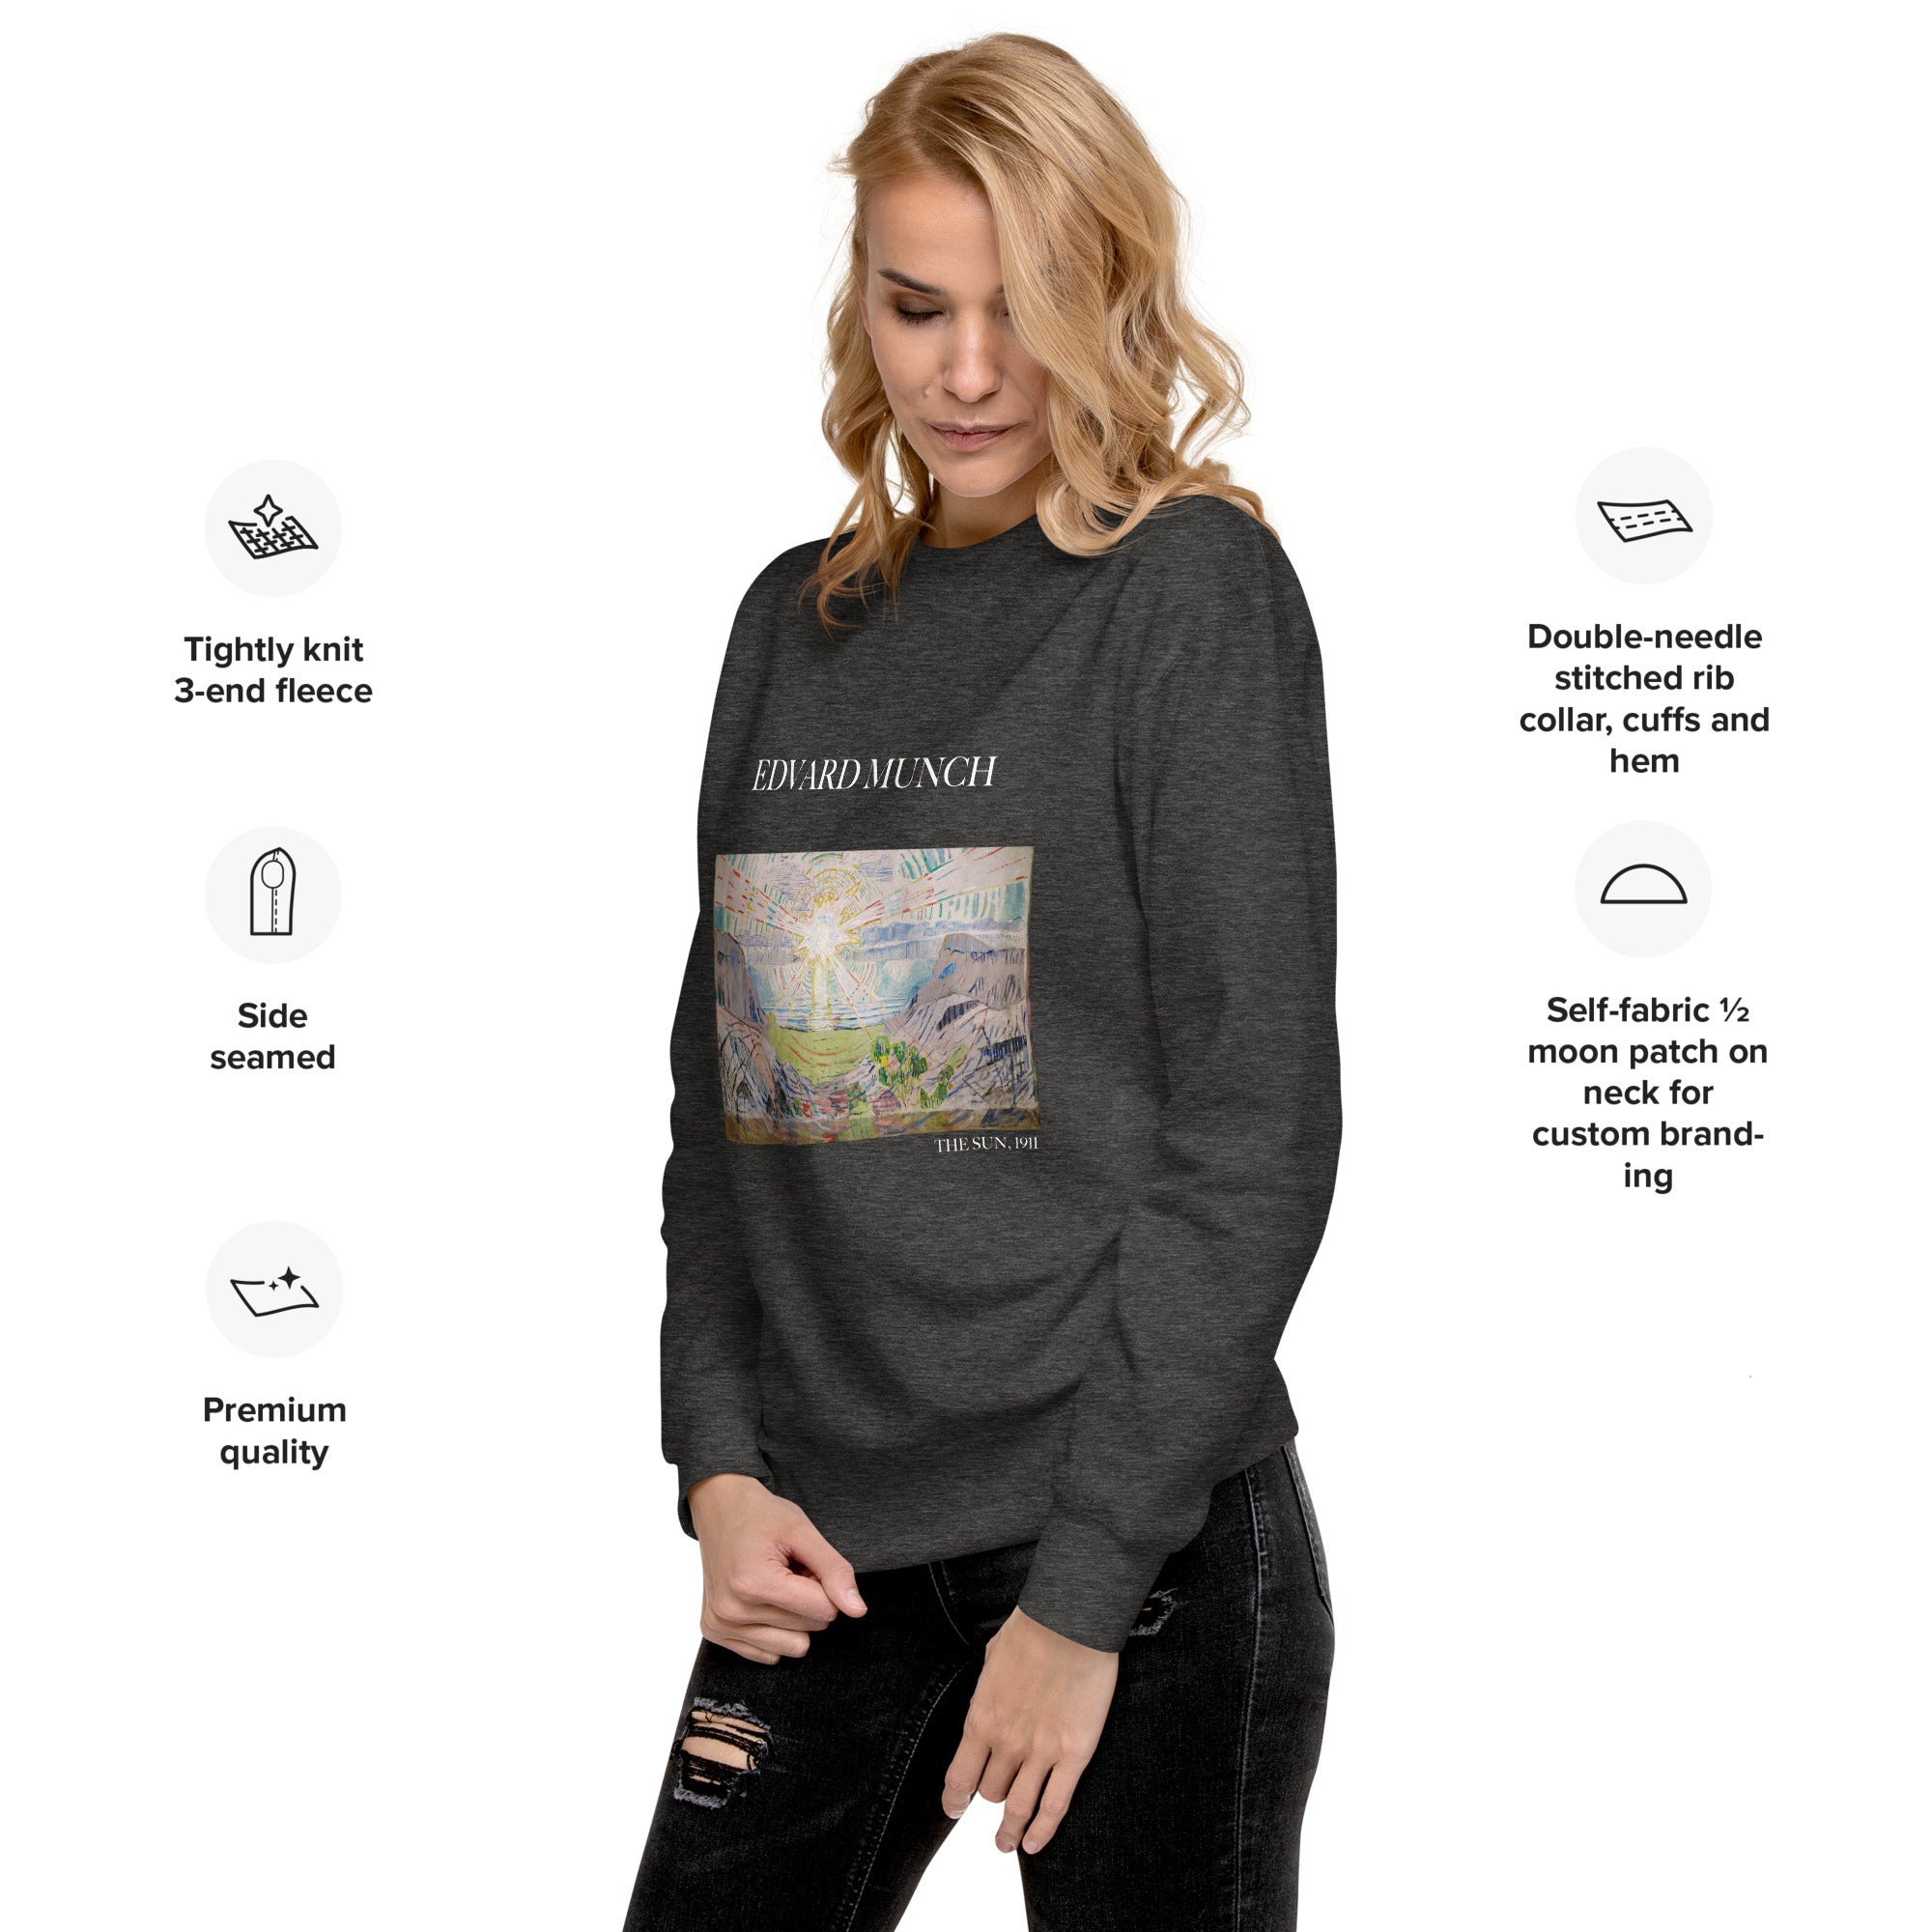 Edvard Munch 'The Sun' Famous Painting Sweatshirt | Unisex Premium Sweatshirt